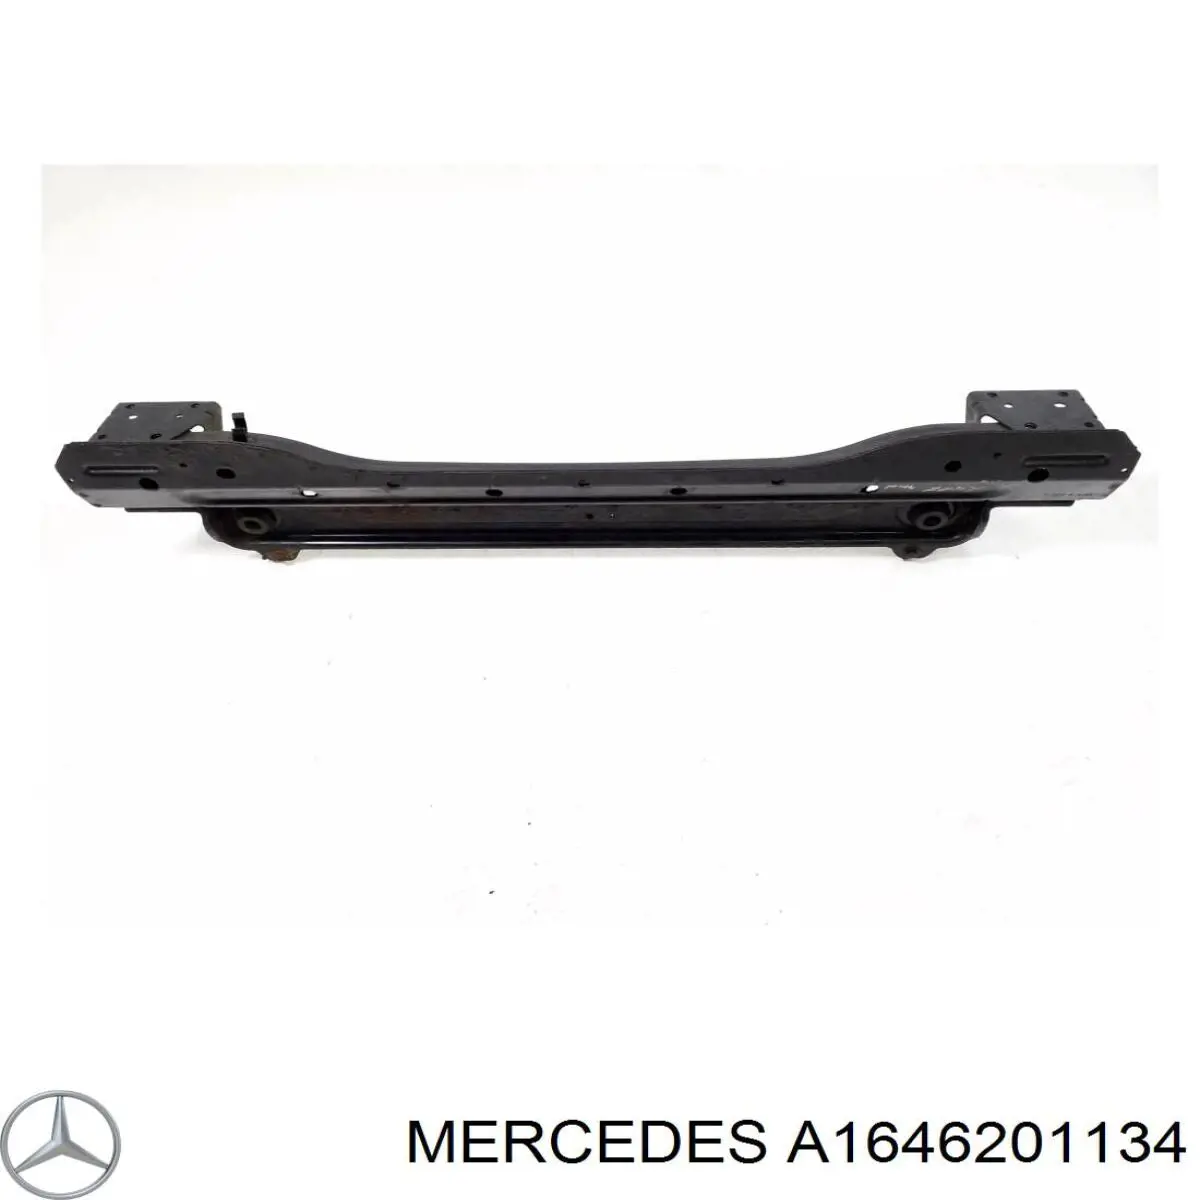 A1646201134 Mercedes soporte de radiador inferior (panel de montaje para foco)